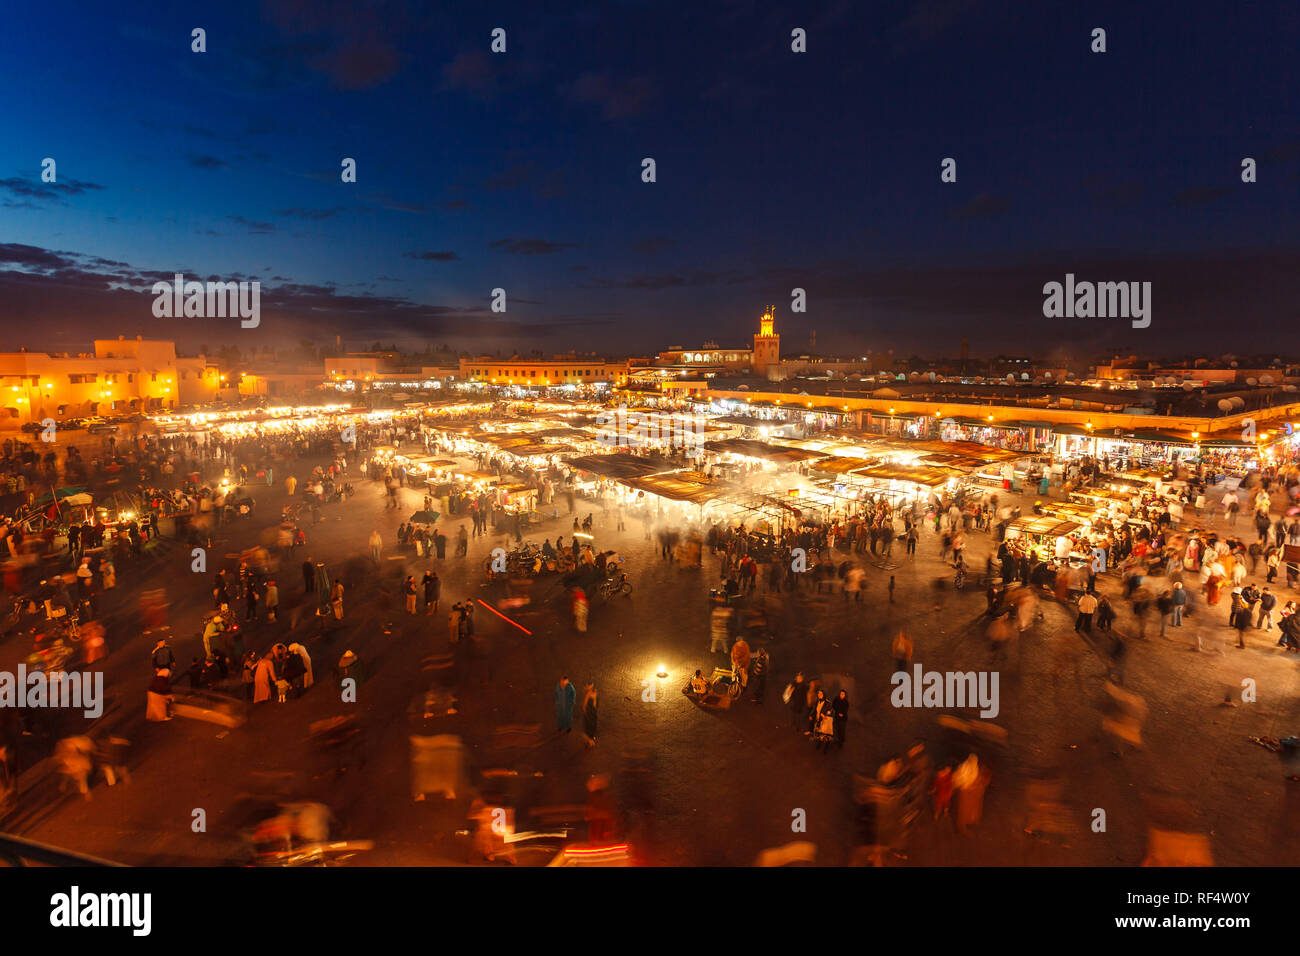 Marrakesh market illuminated at night viewed from above Stock Photo